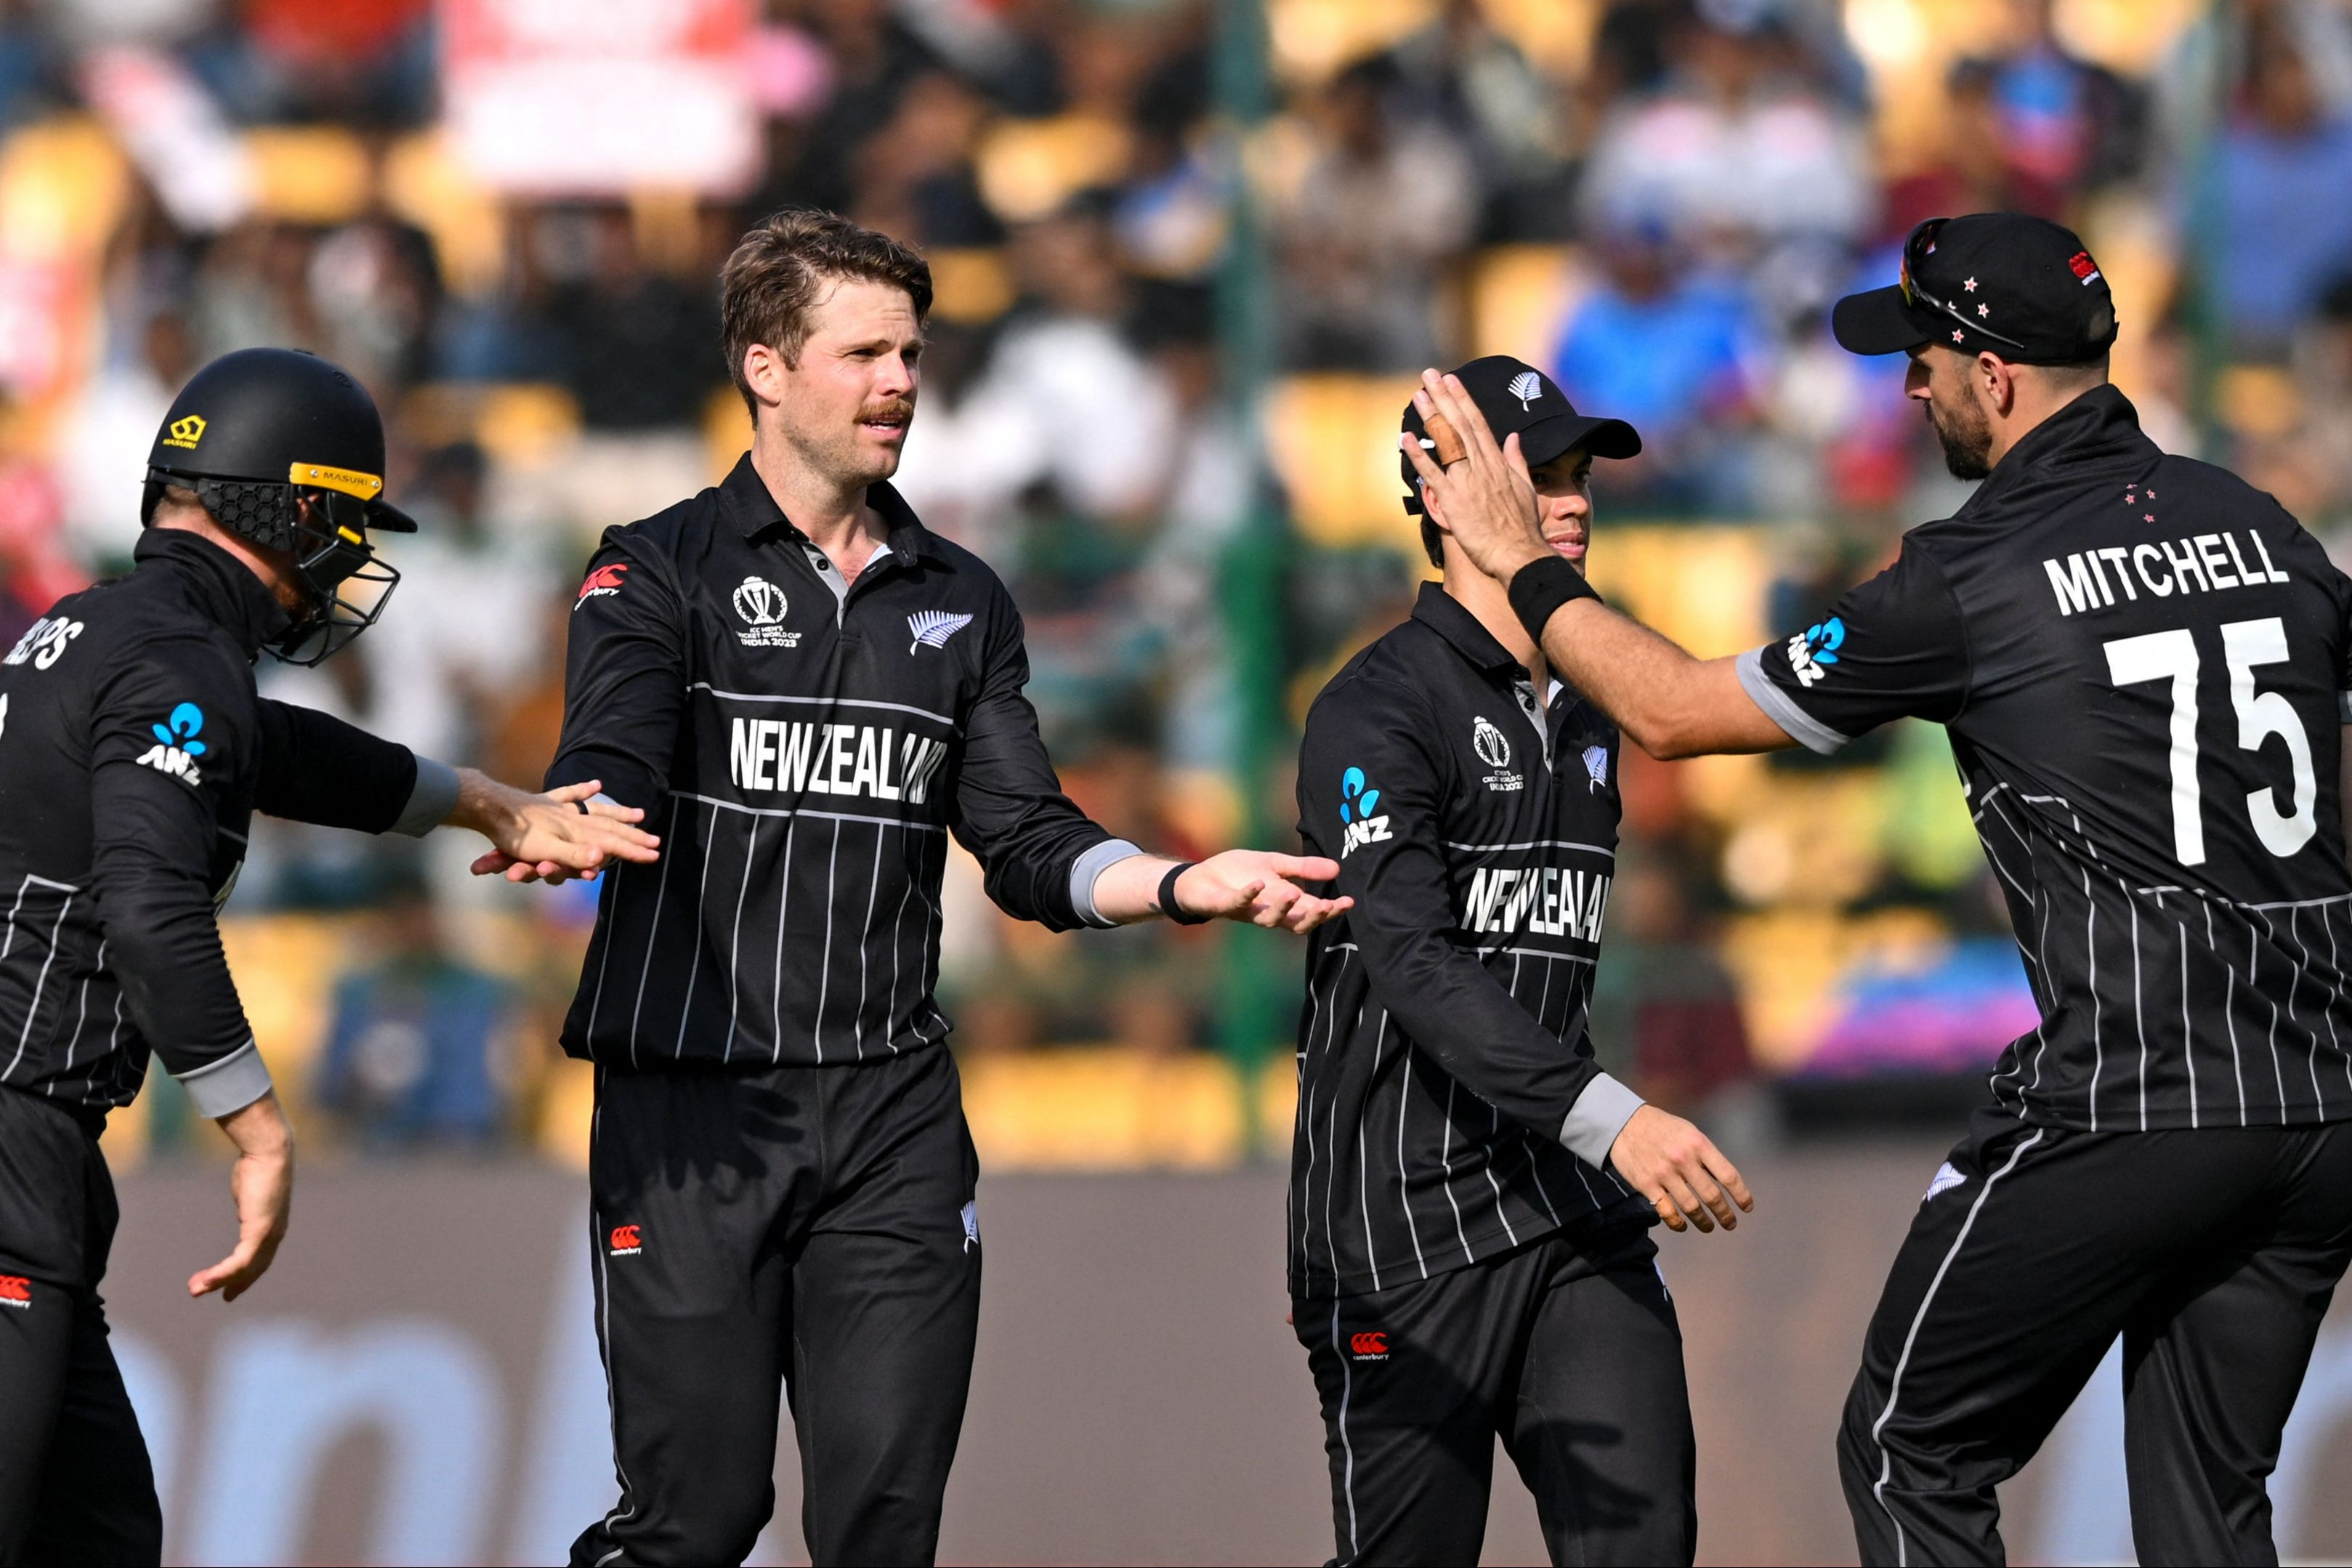 New Zealand cruised to victory over Sri Lanka